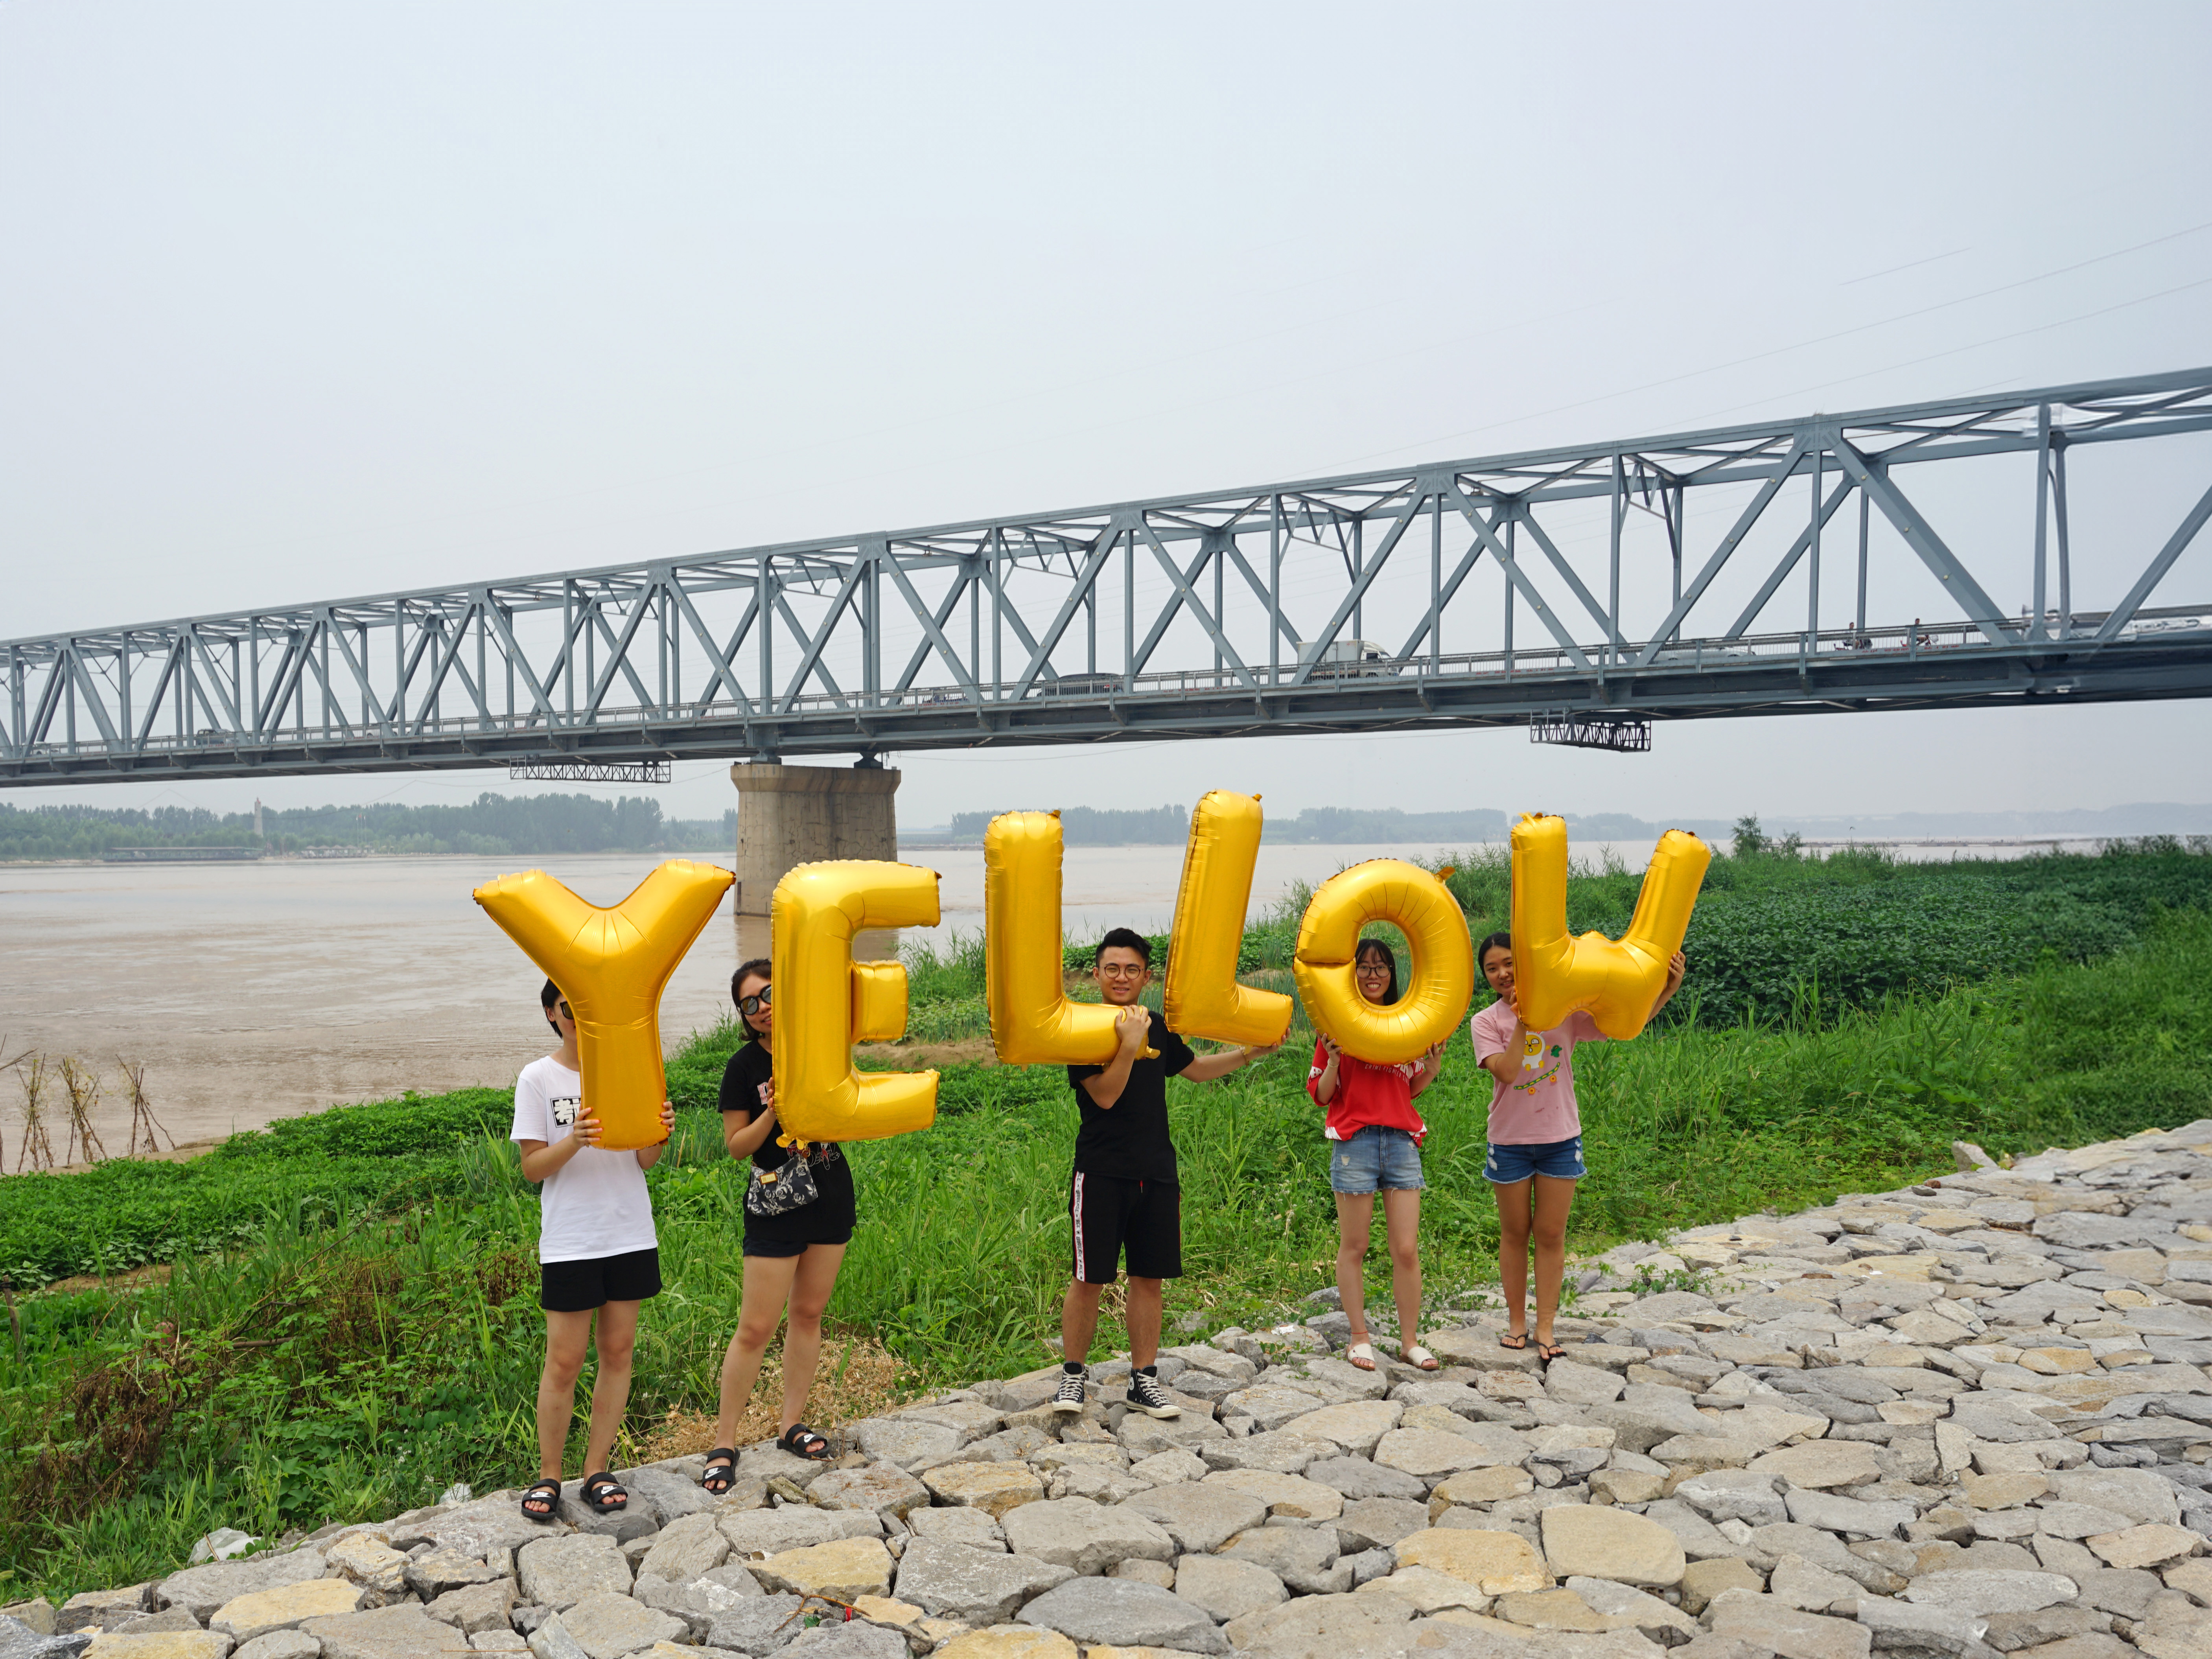 China, Binzhou, Binzhou Yellow River Bridge (滨州黄河大桥) - Yellow, Silence was Golden, gold balloons